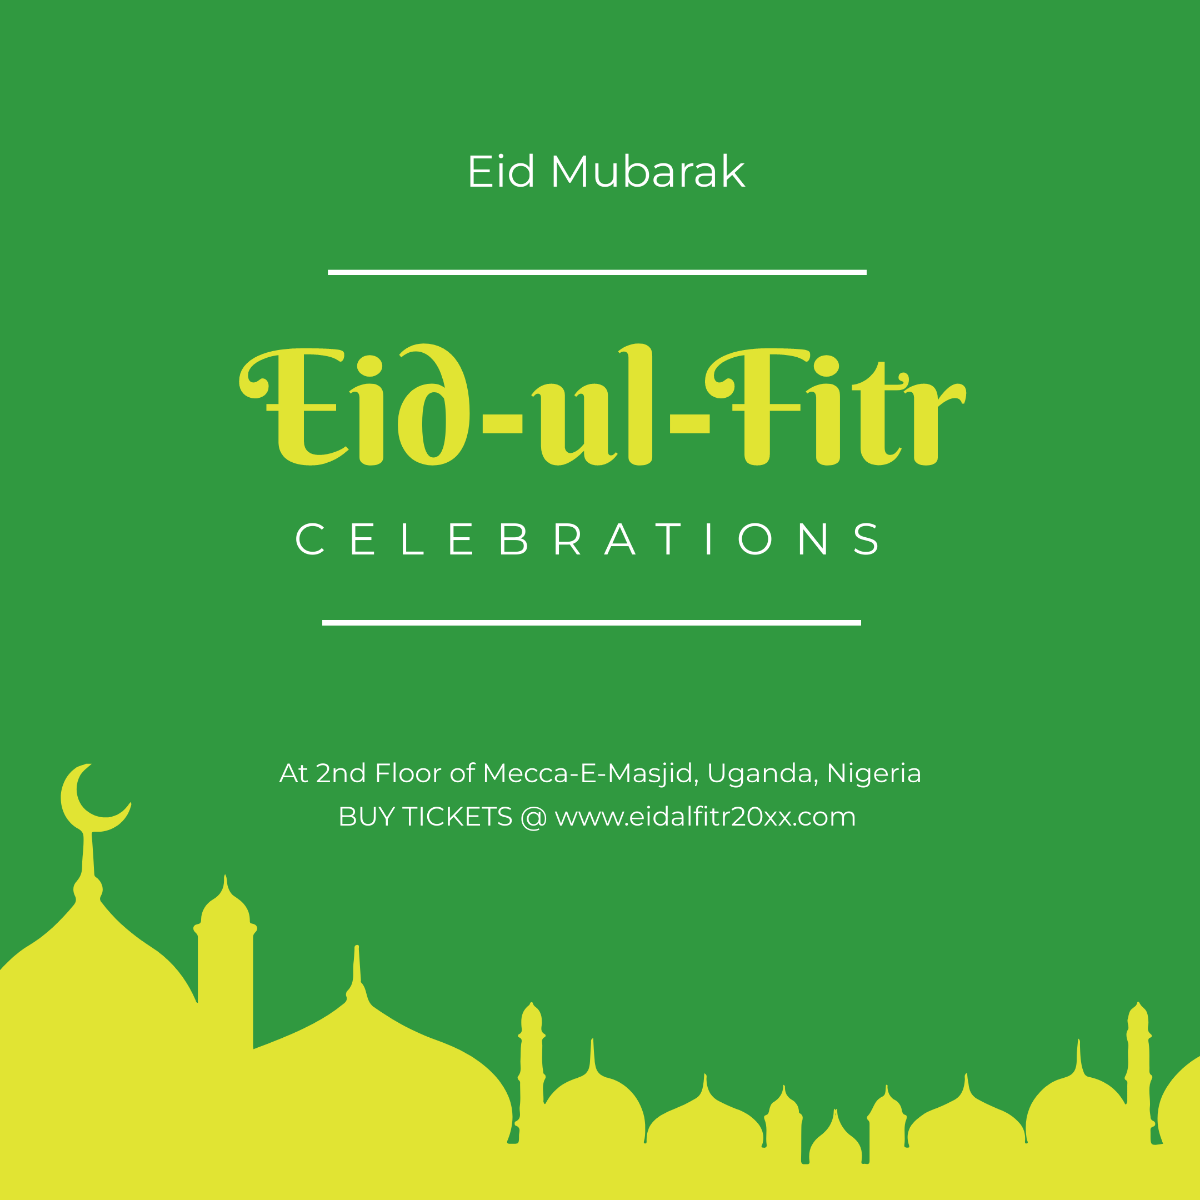 Eid Ul Fitr Instagram Post Template